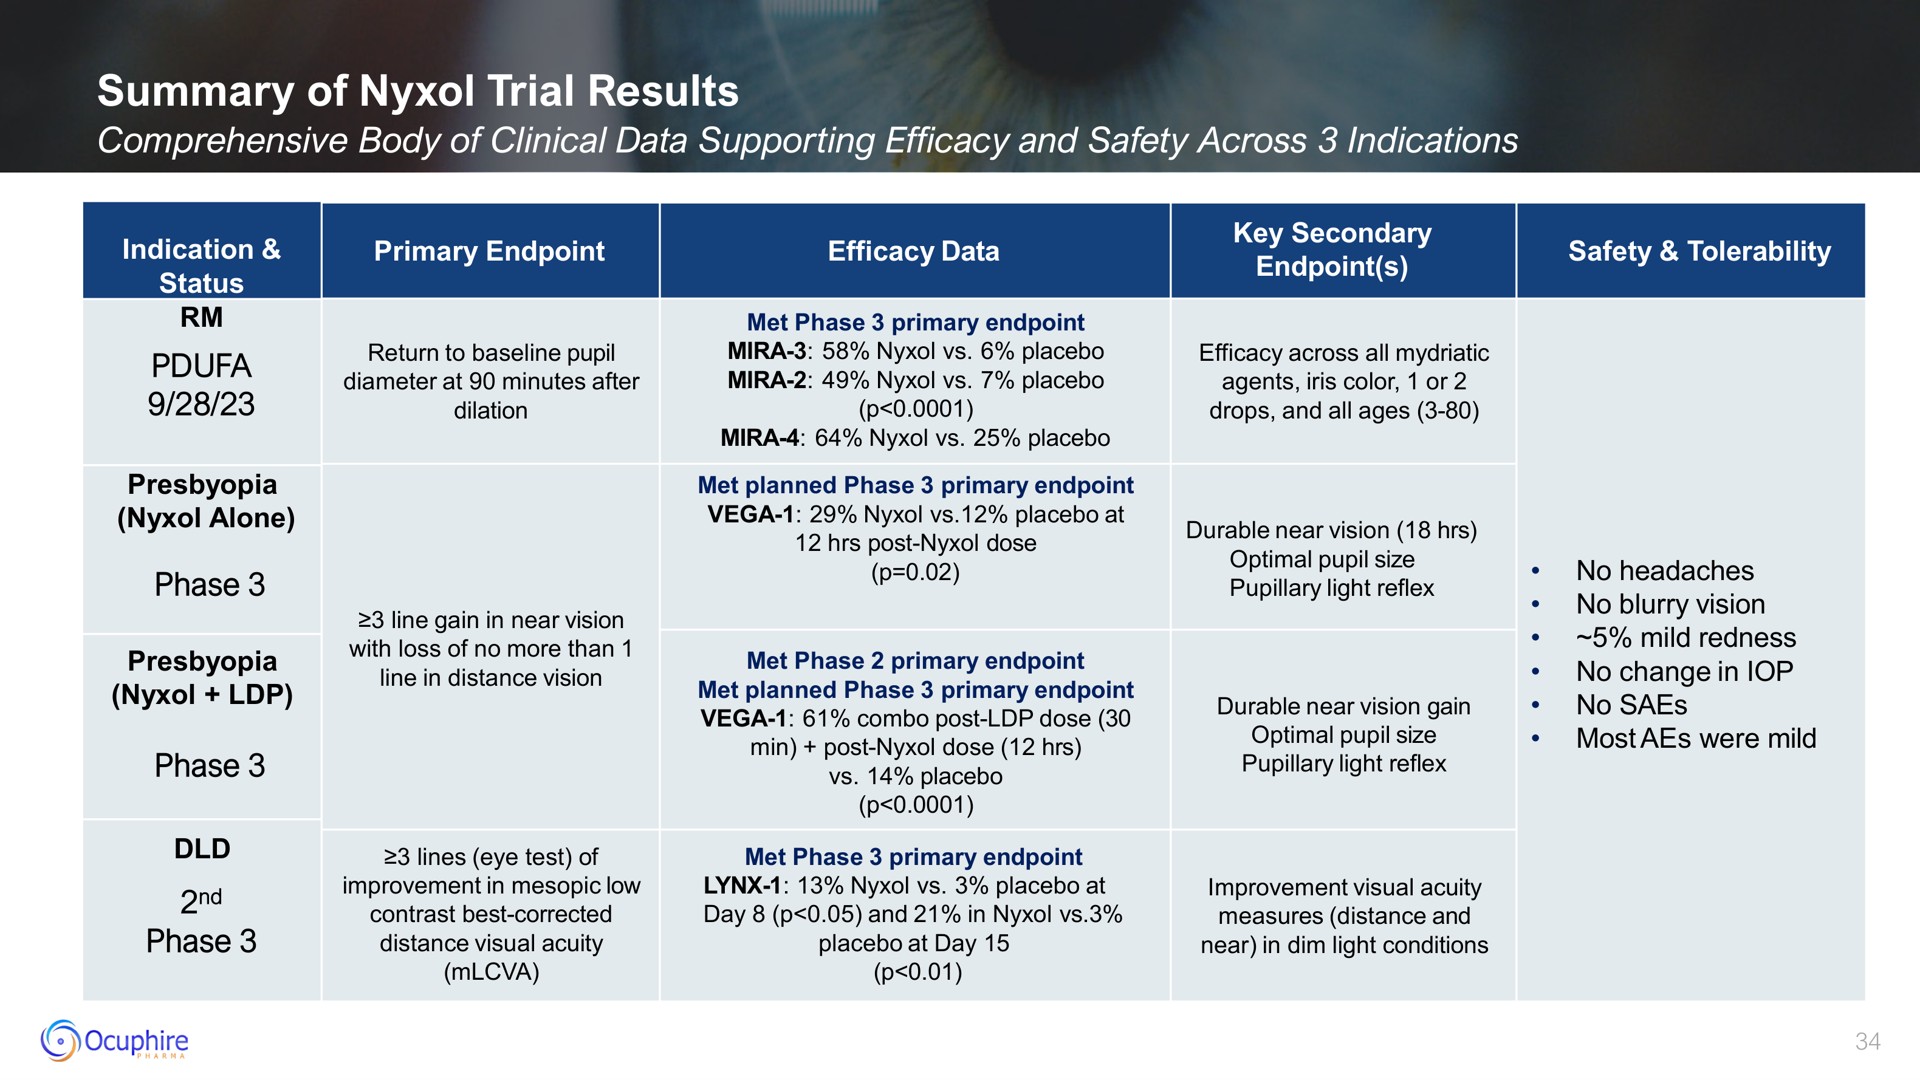 summary of trial results | Ocuphire Pharma